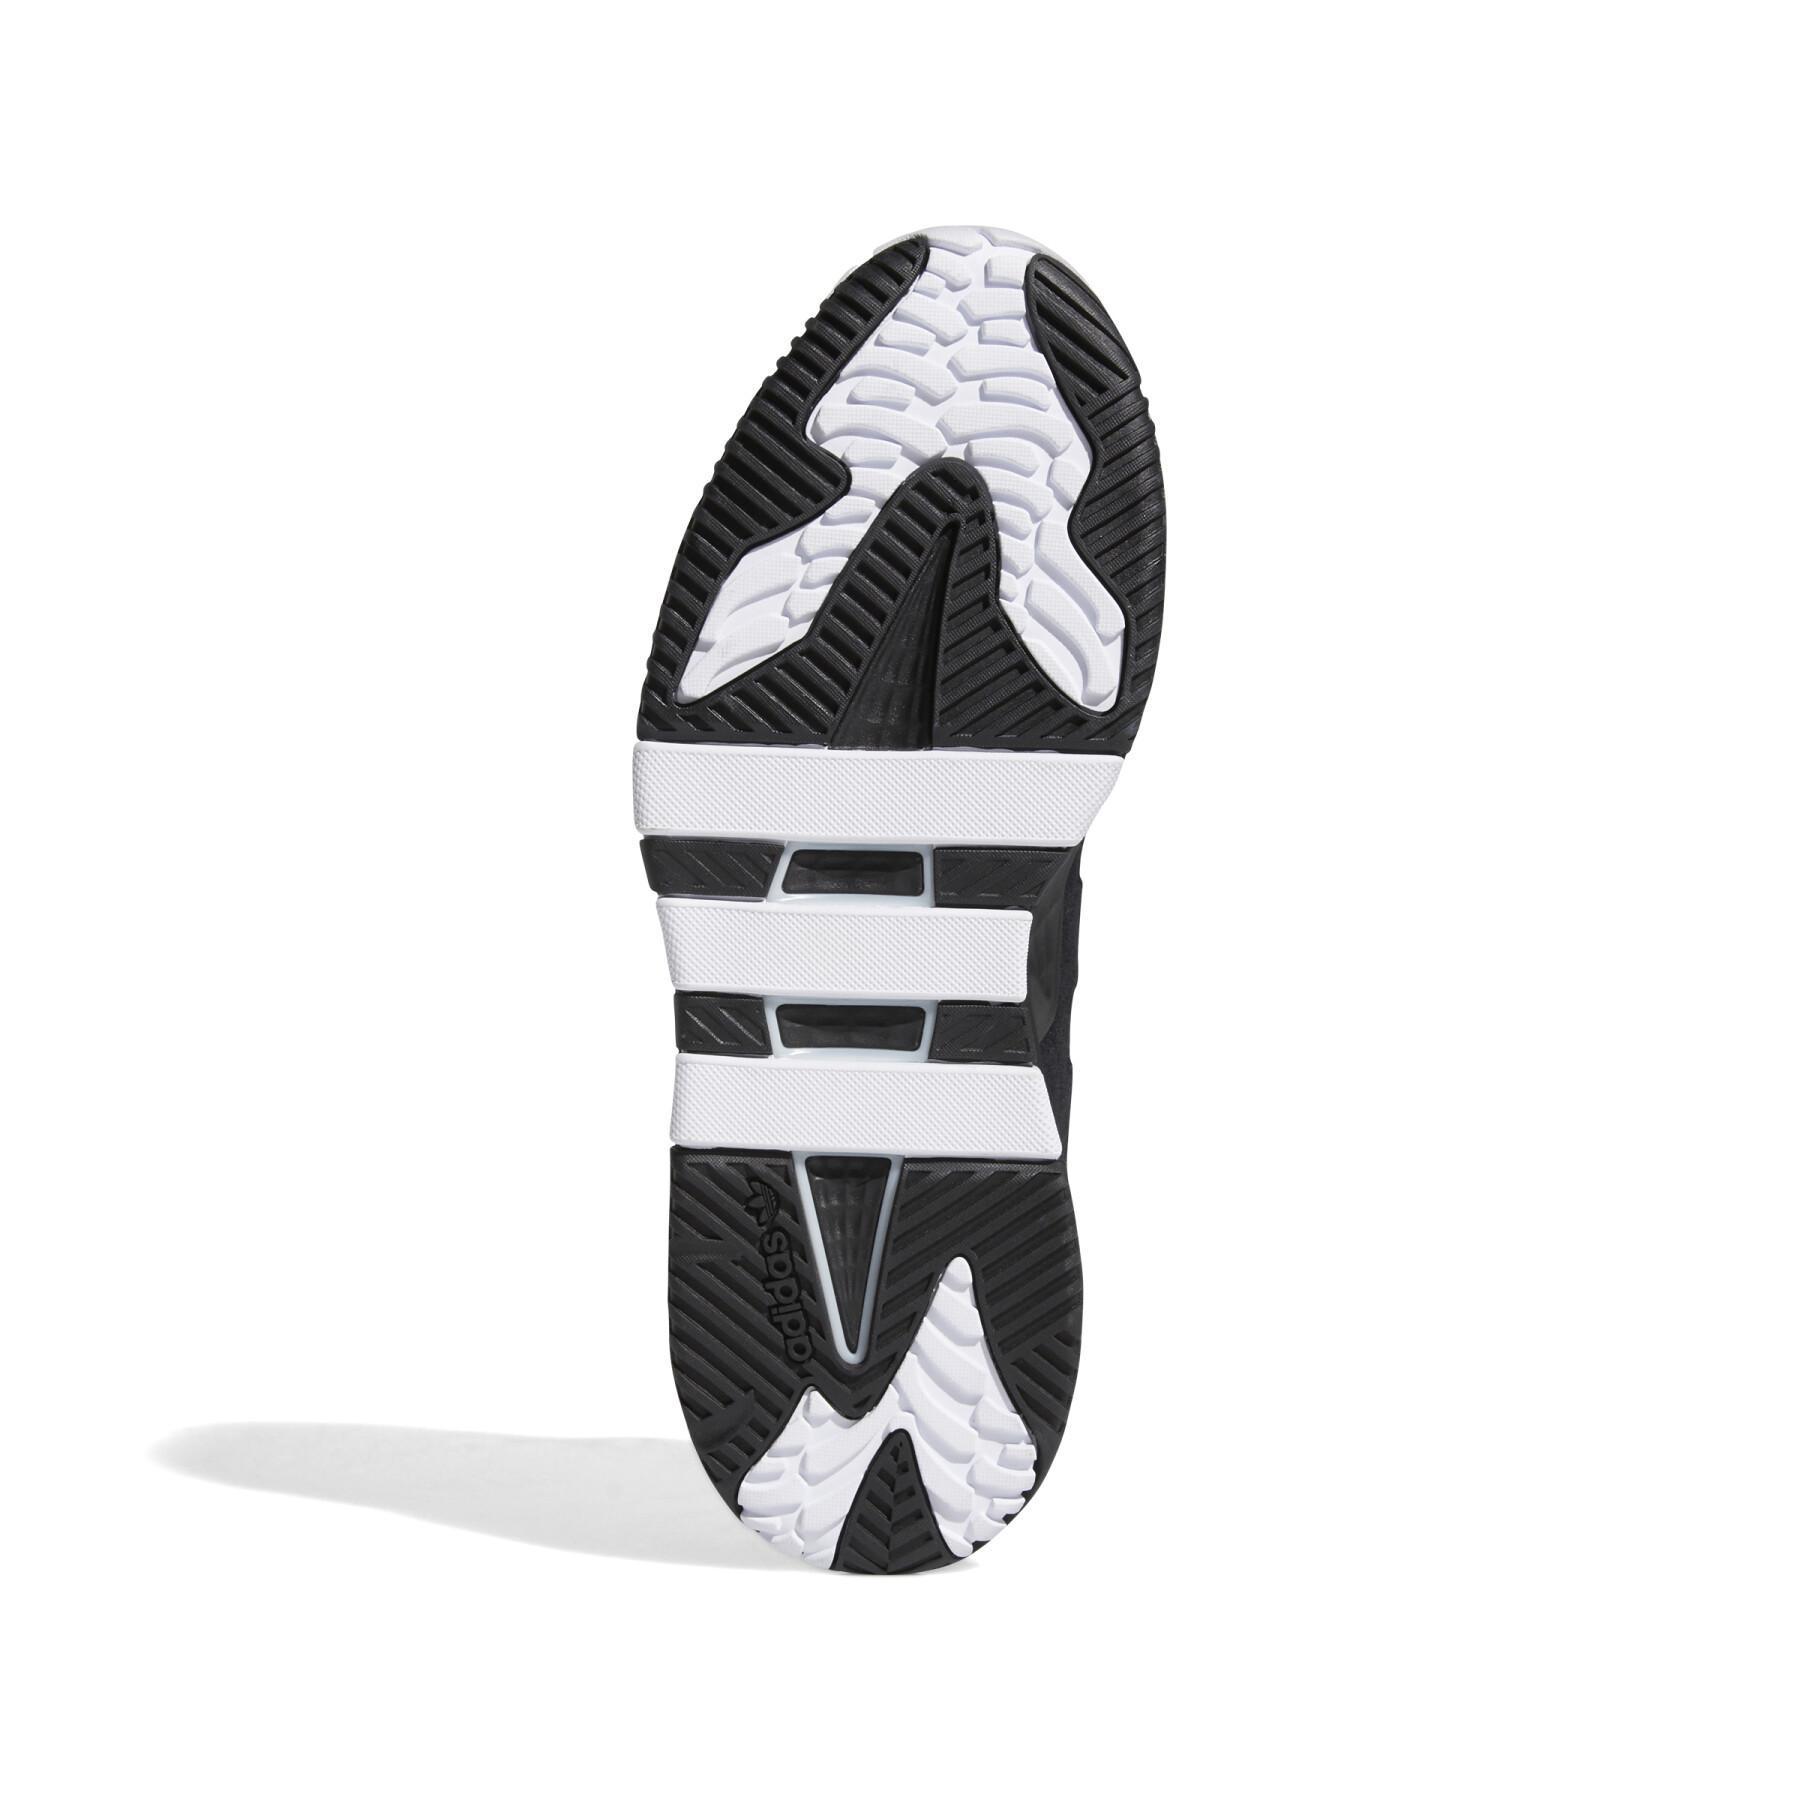 Sneakers adidas Niteball - adidas - Brands - Lifestyle